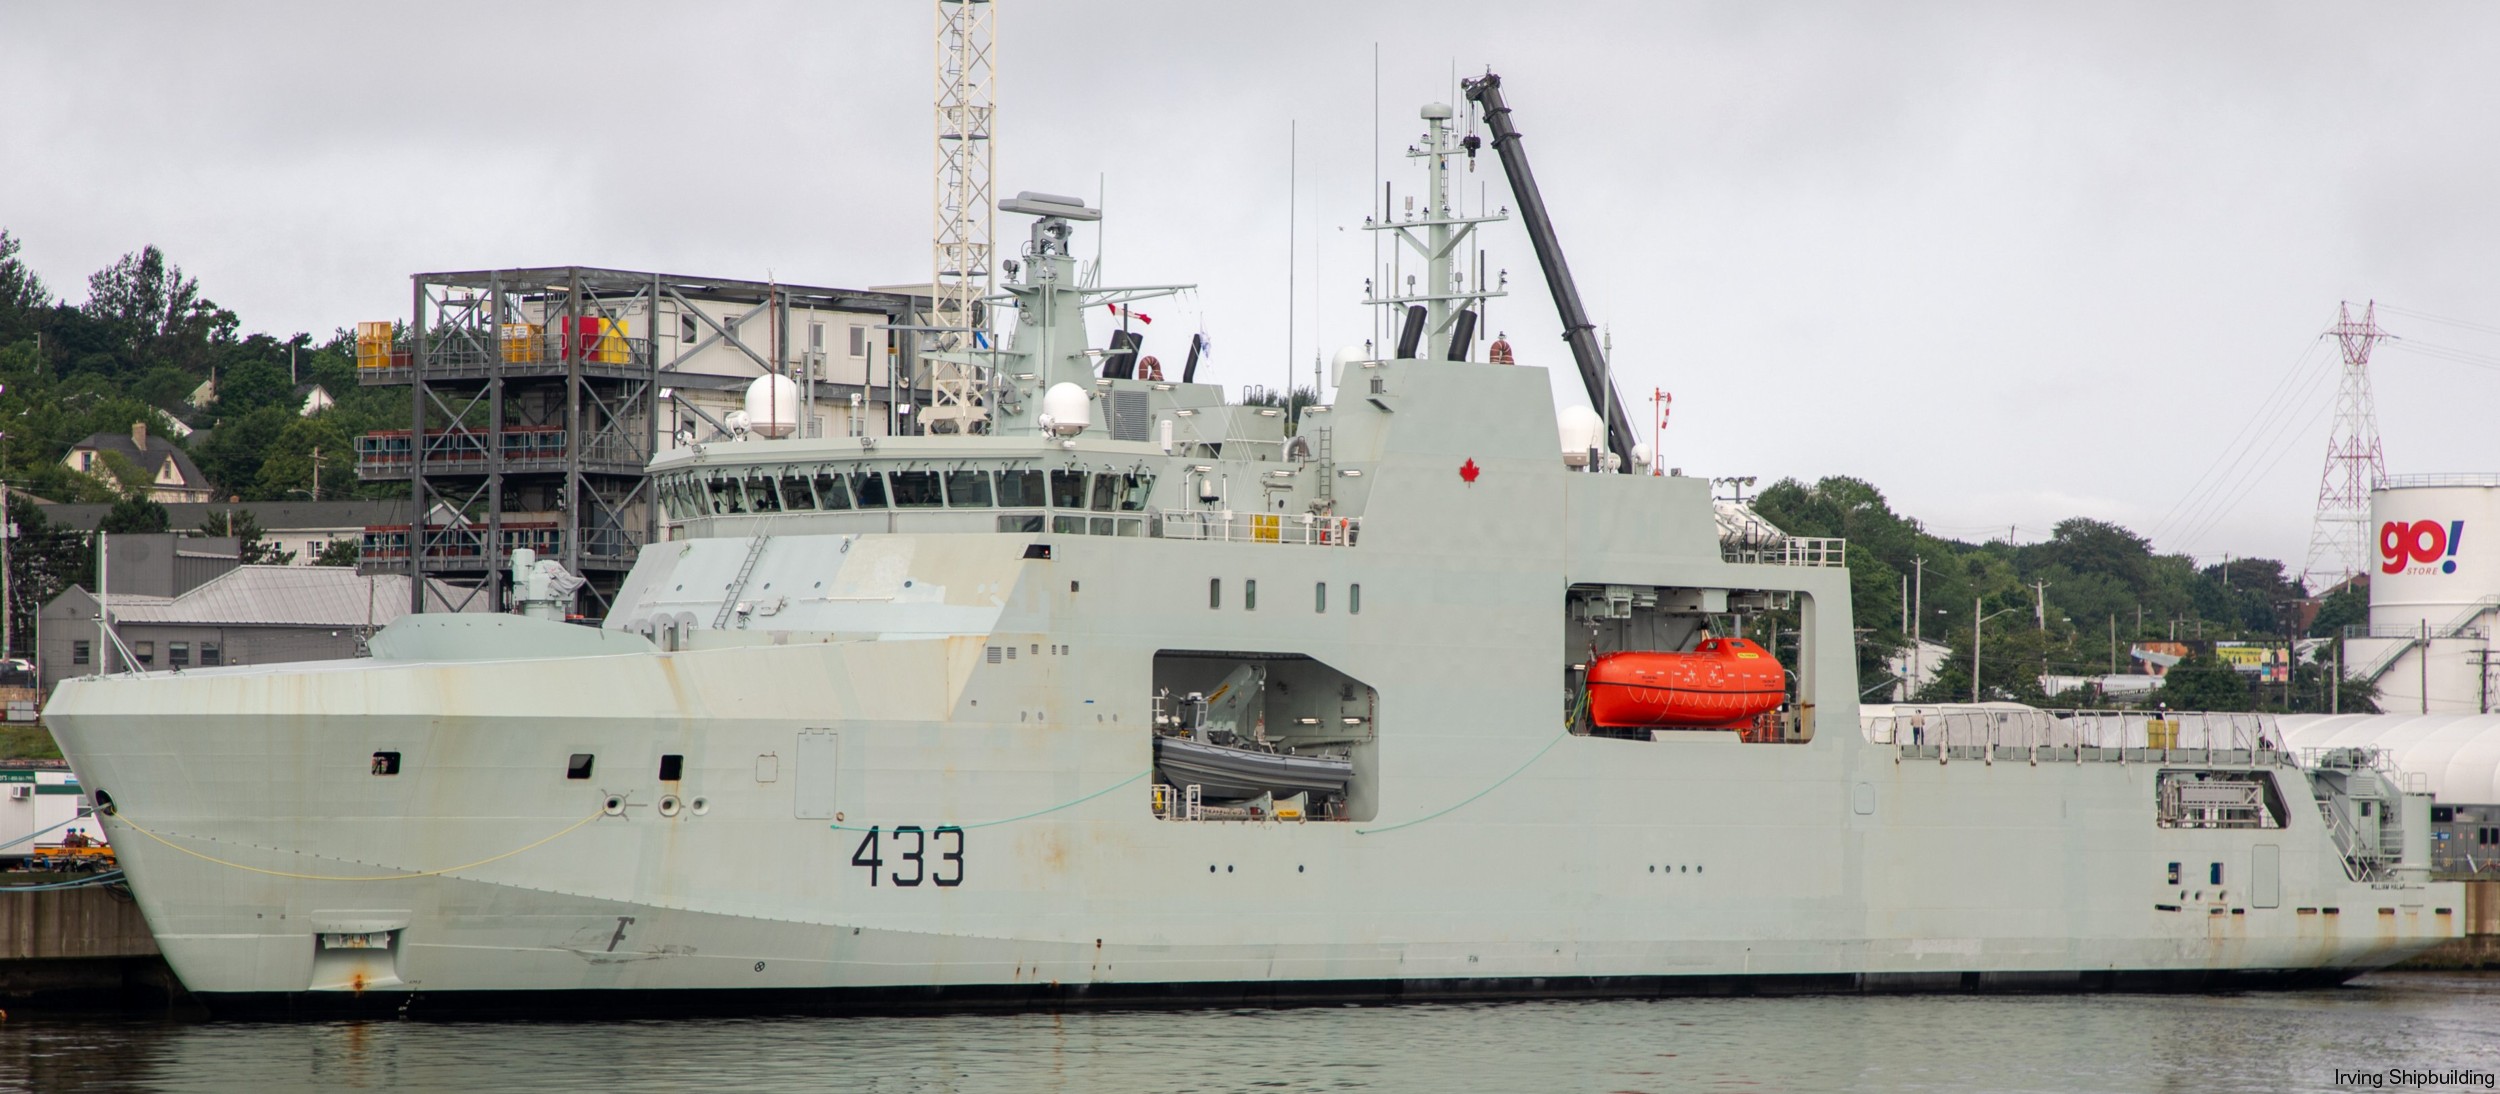 aopv-433 hmcs william hall harry dewolf class arctic offshore patrol vessel ship ncsm royal canadian navy 05